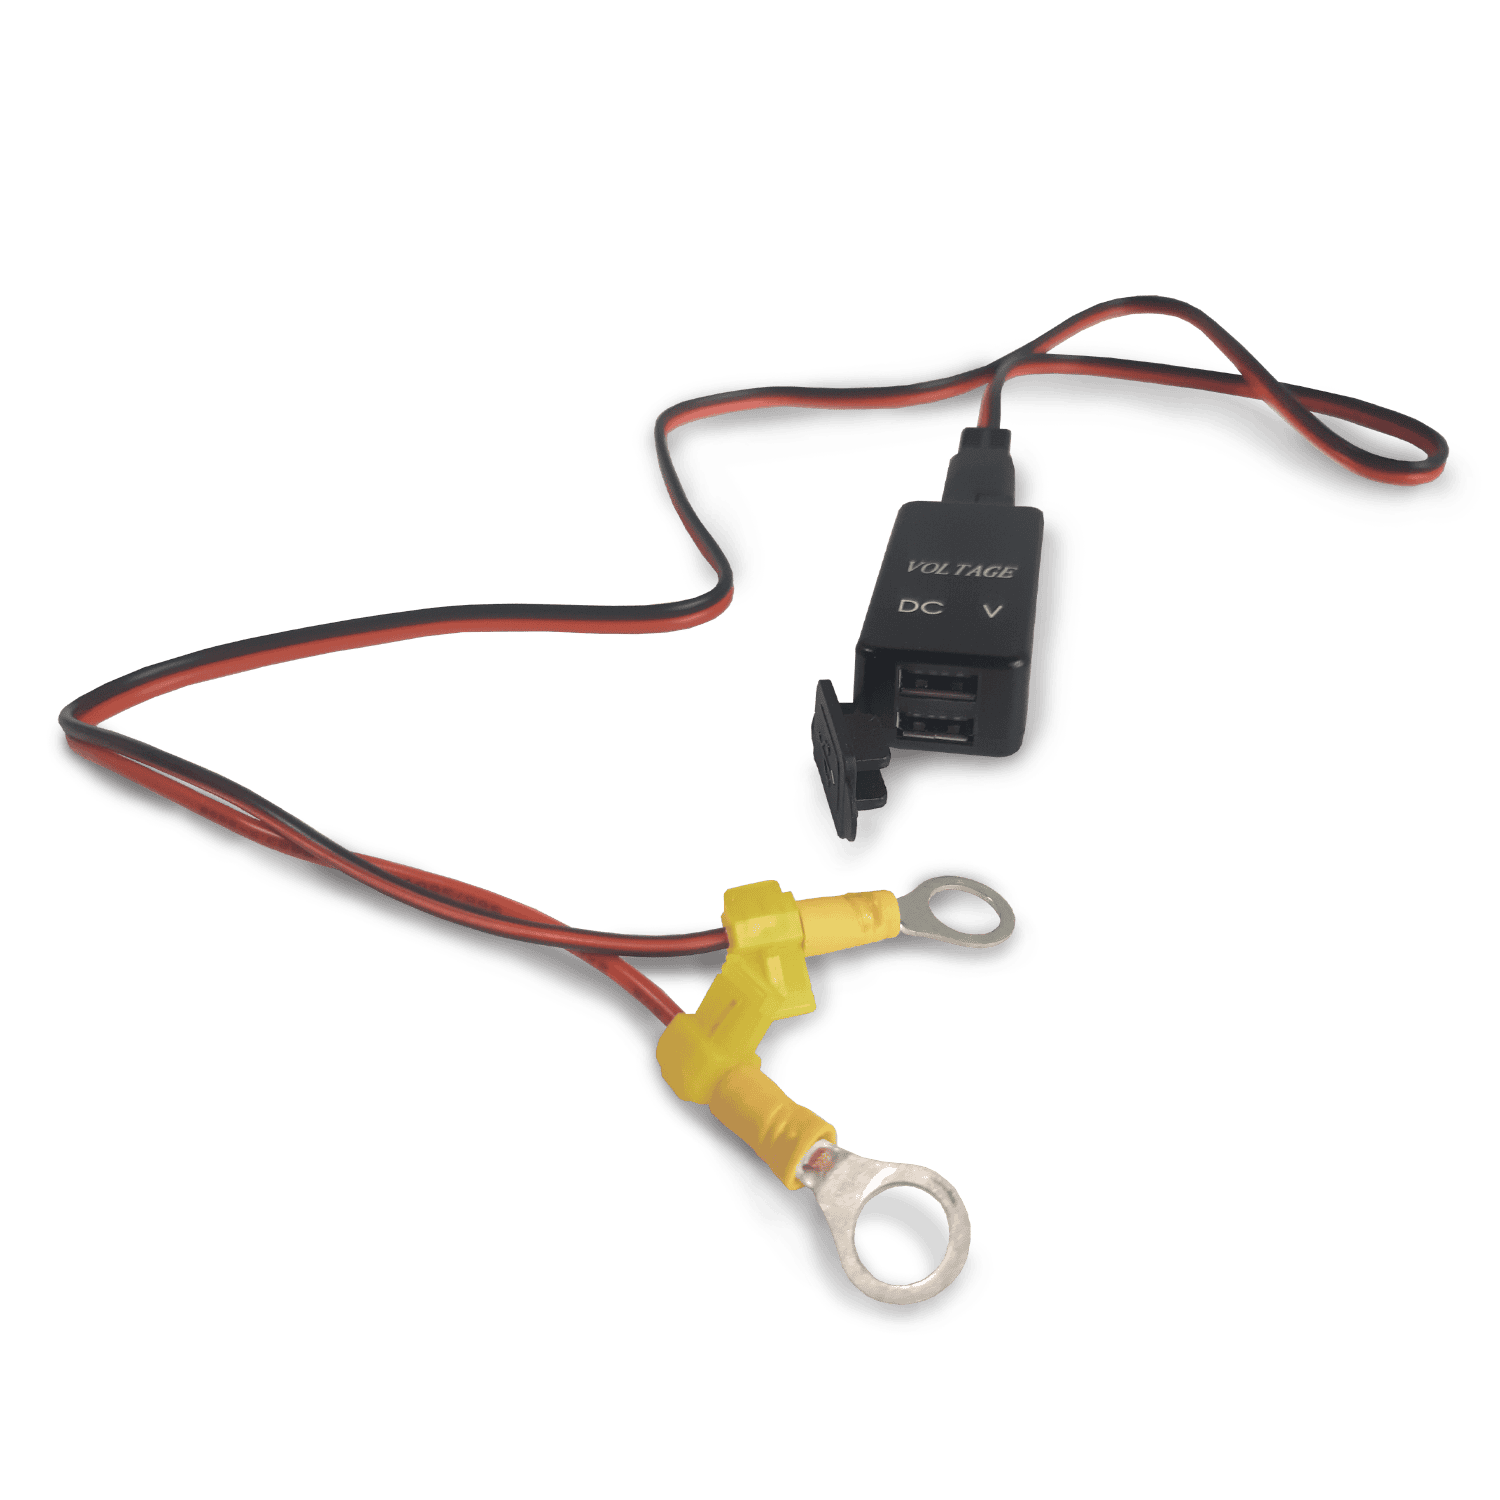 USB Phone Charger, Voltmeter, & Terminal Adapter Wiring Kit